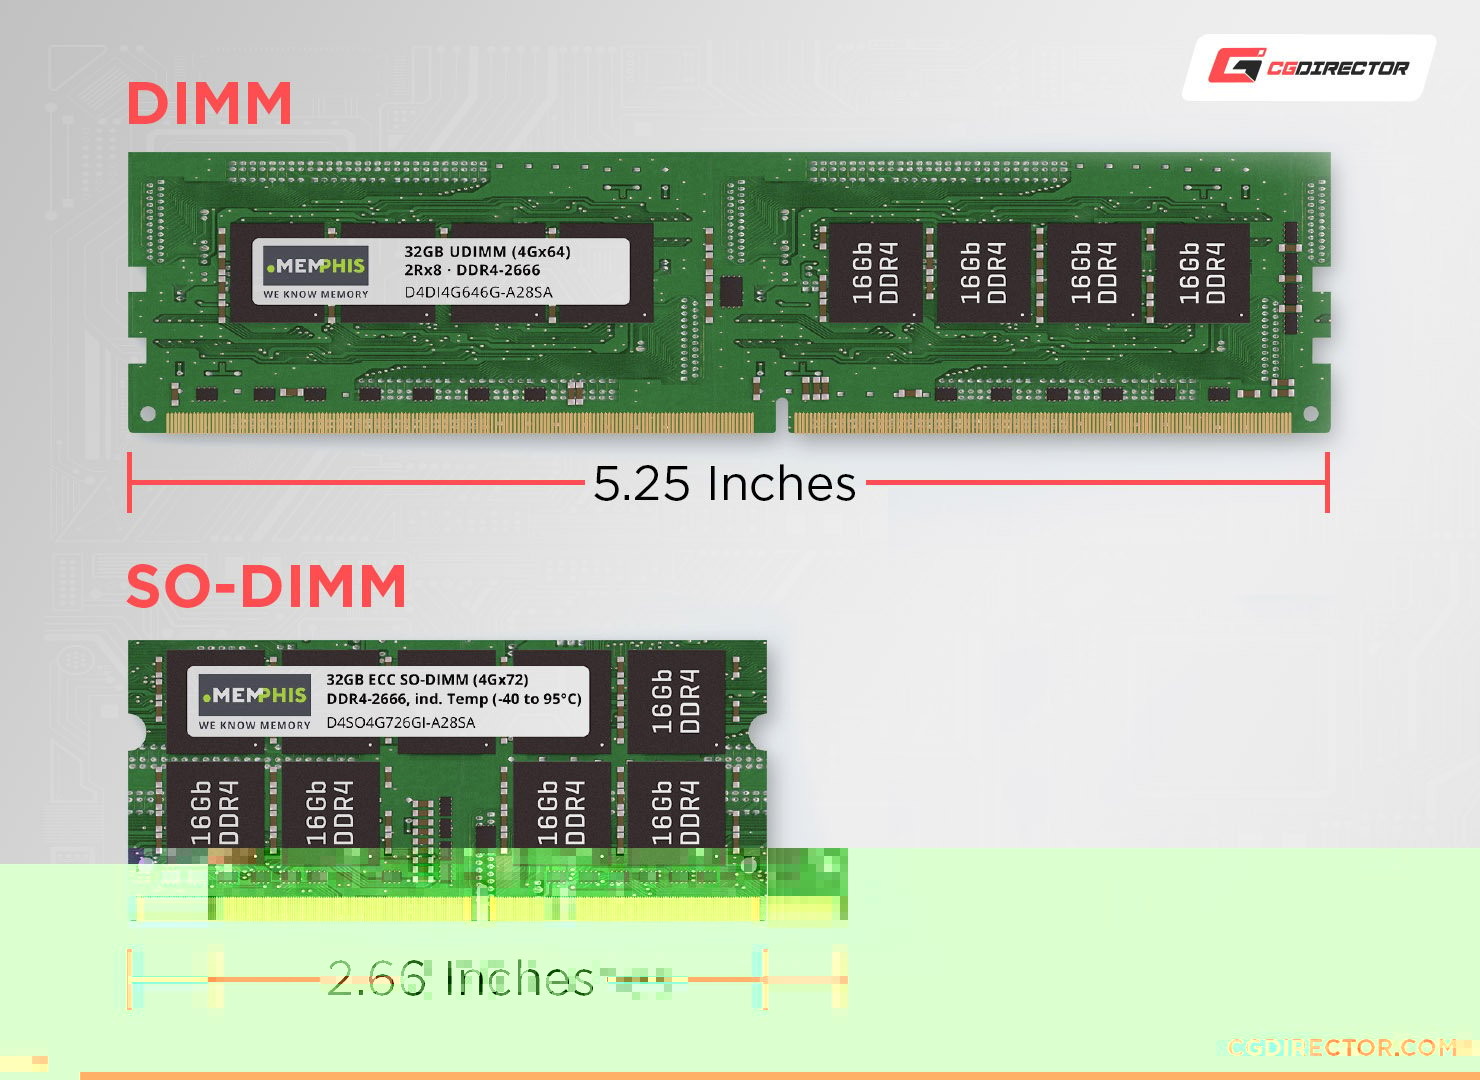 DIMM vs SO-DIMM Size Comparison